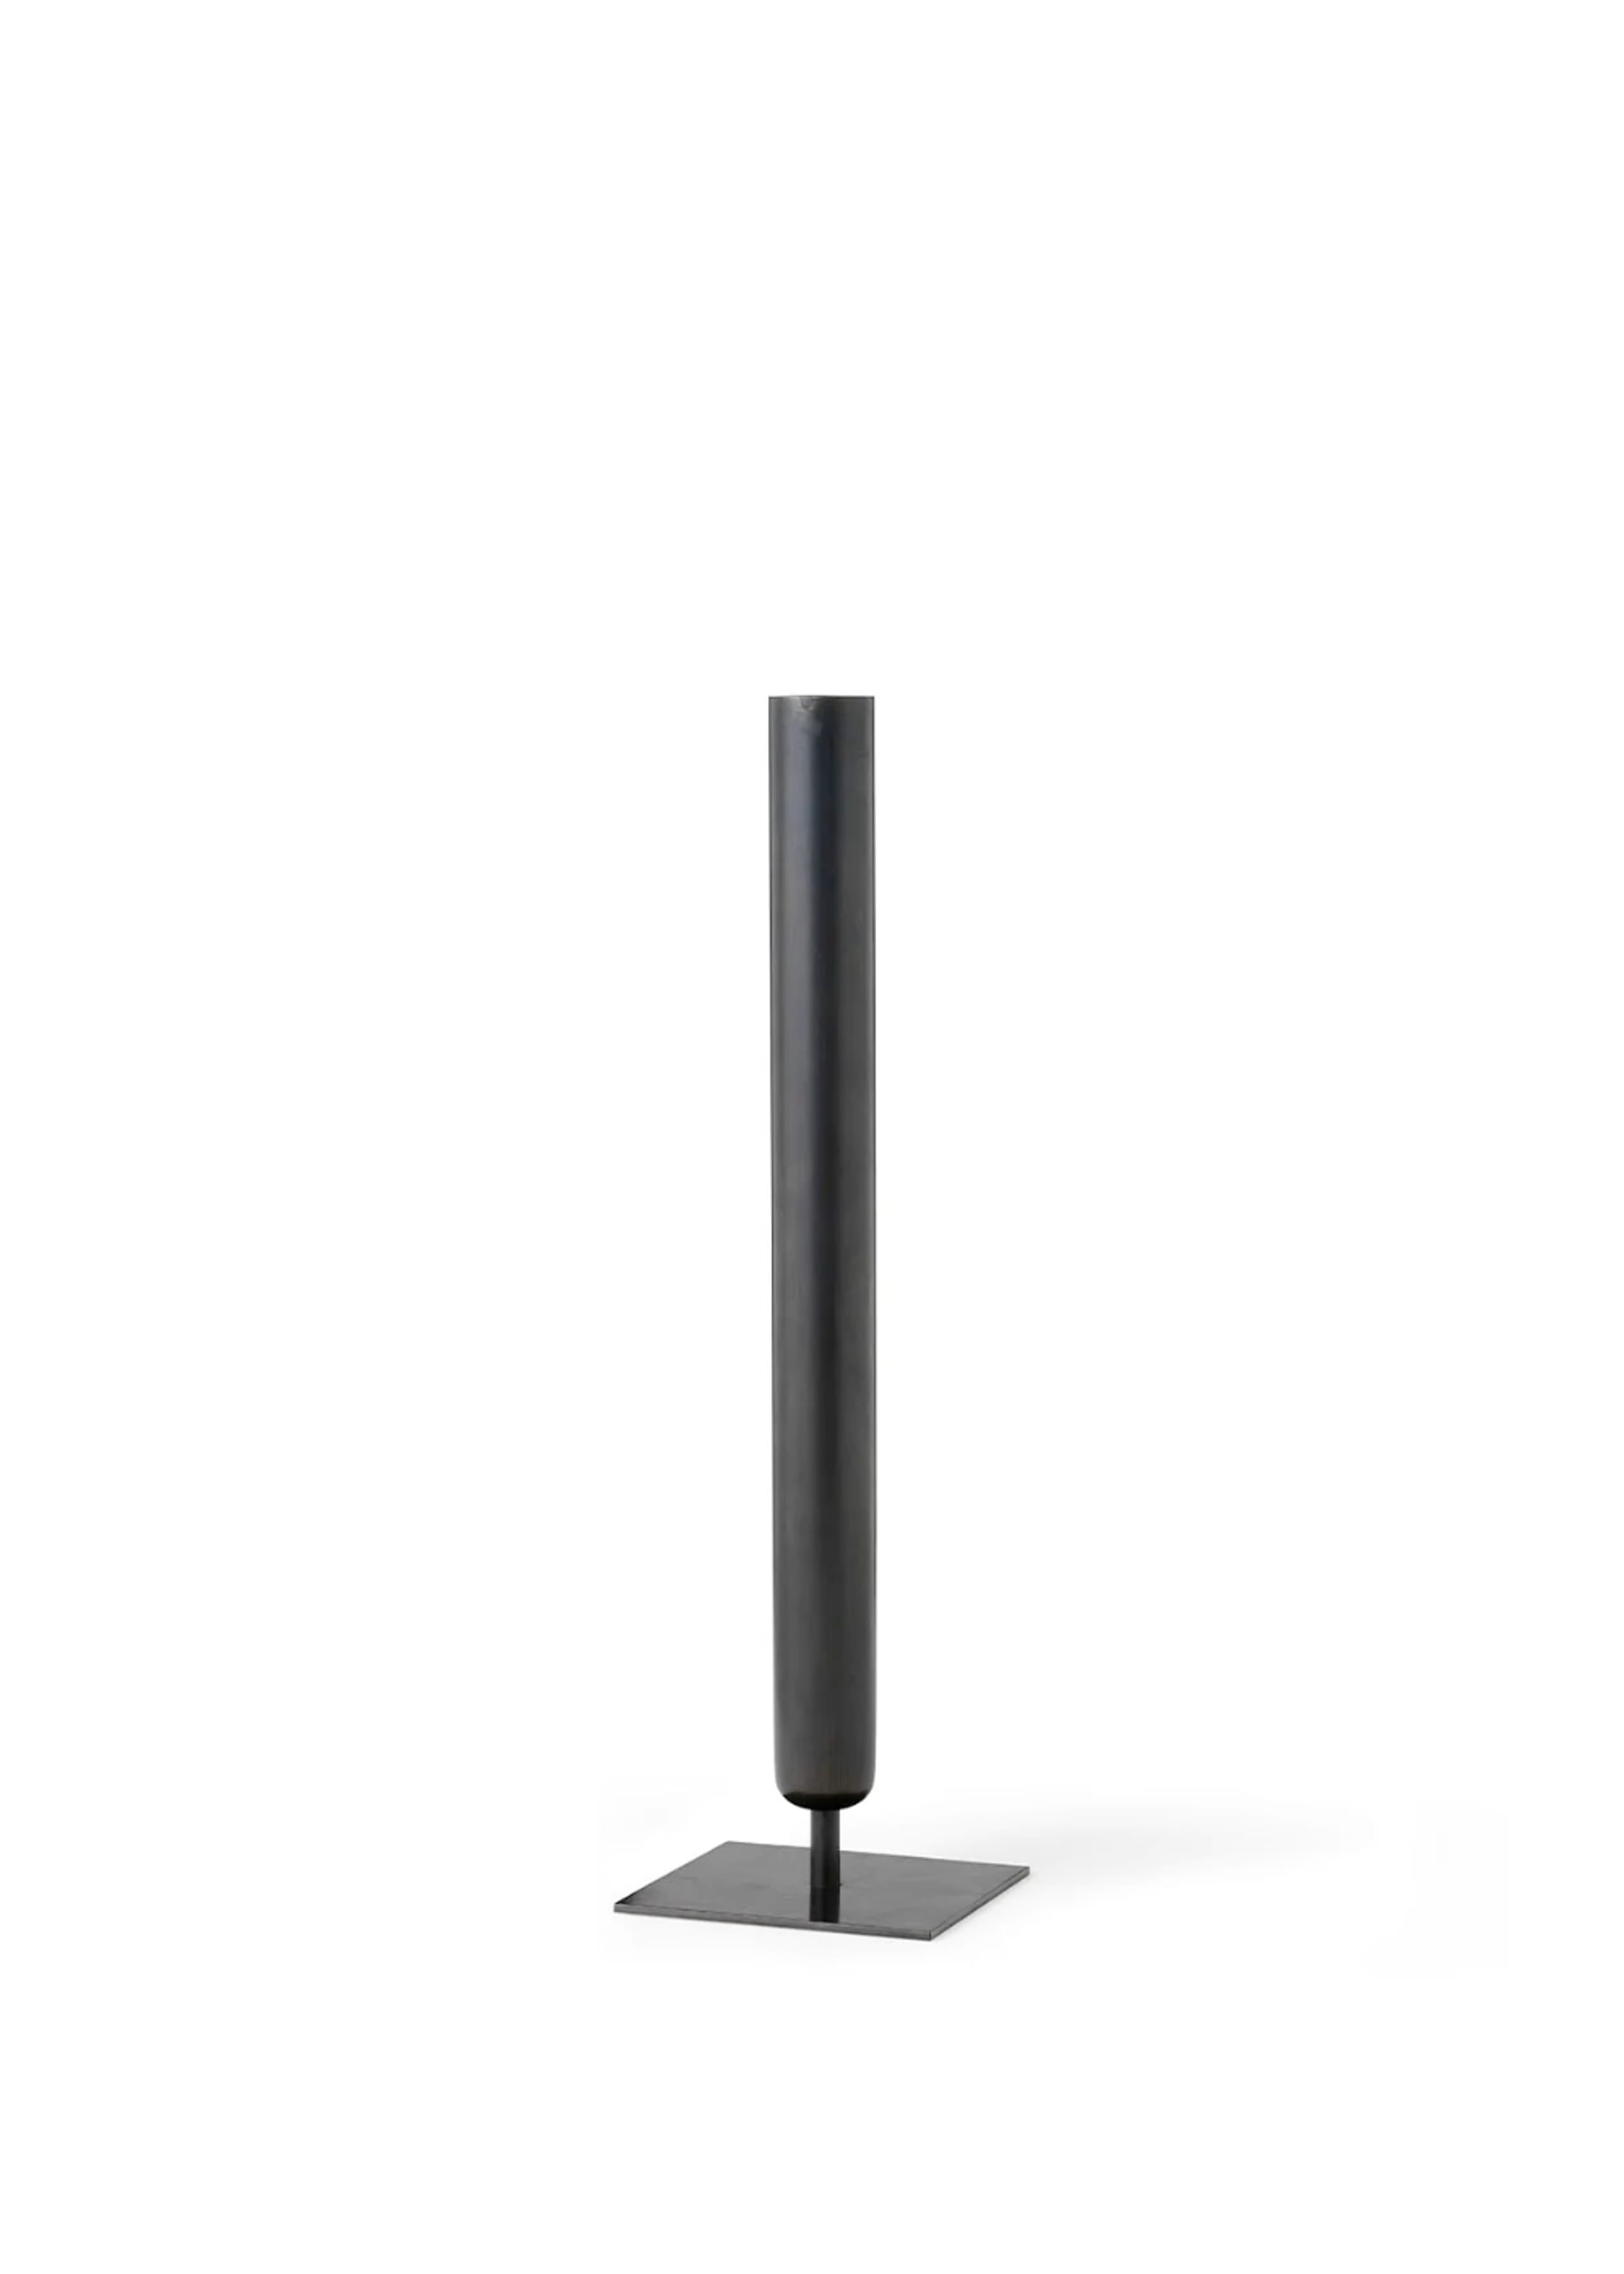 MENU - Vase - Stance Vase - H40 - Black/dark